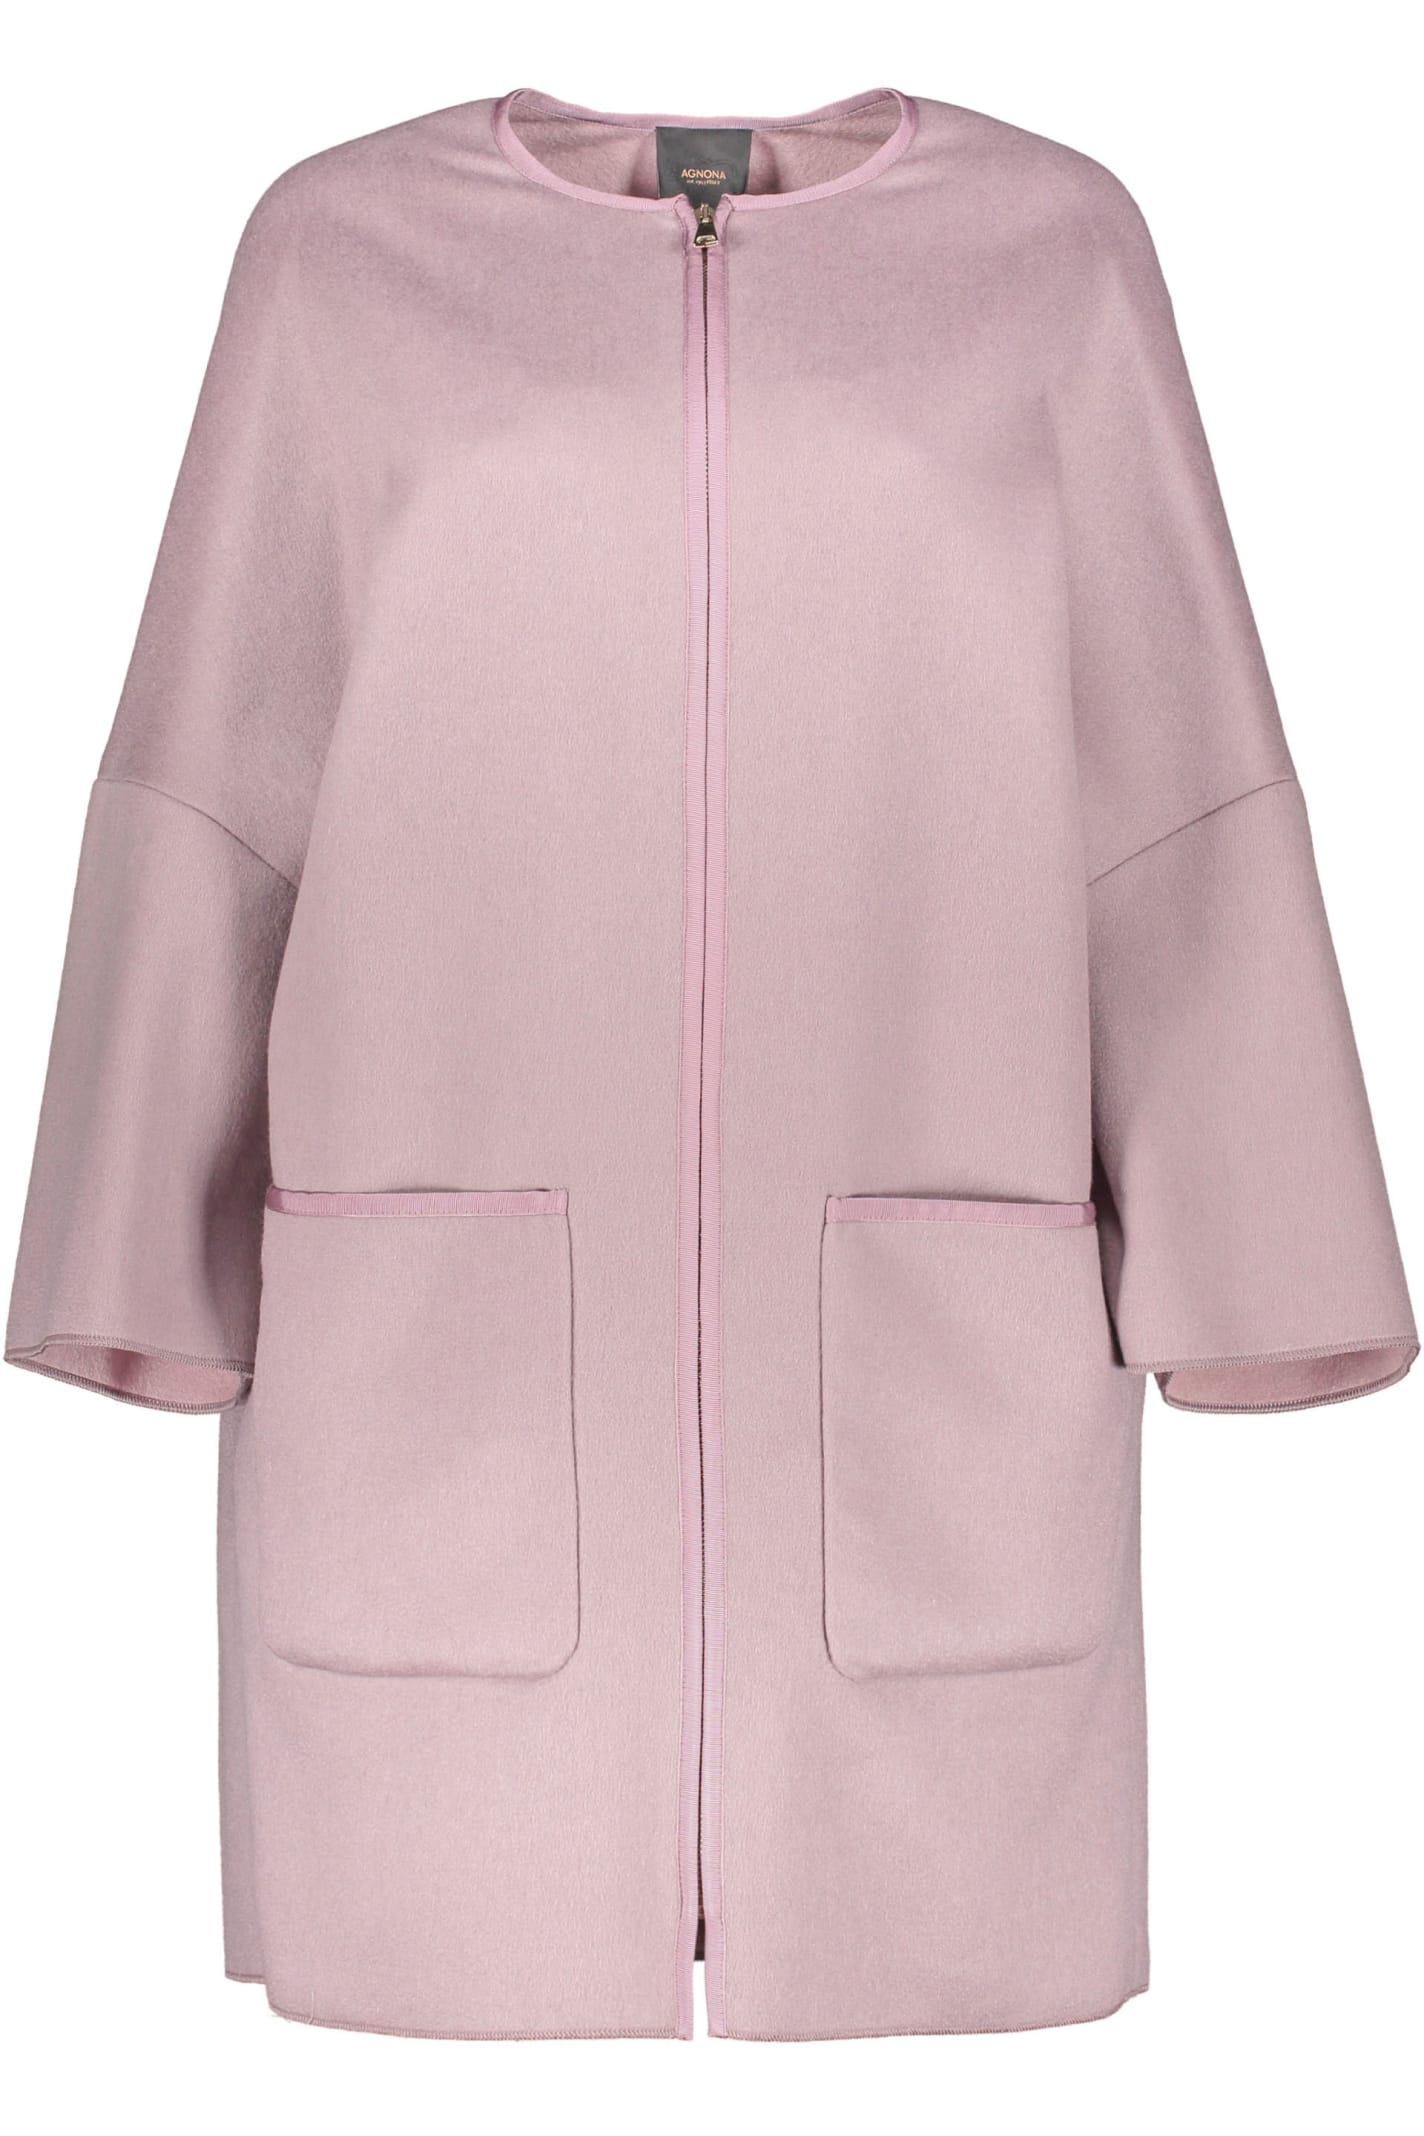 Agnona Cashmere Jacket In Pink